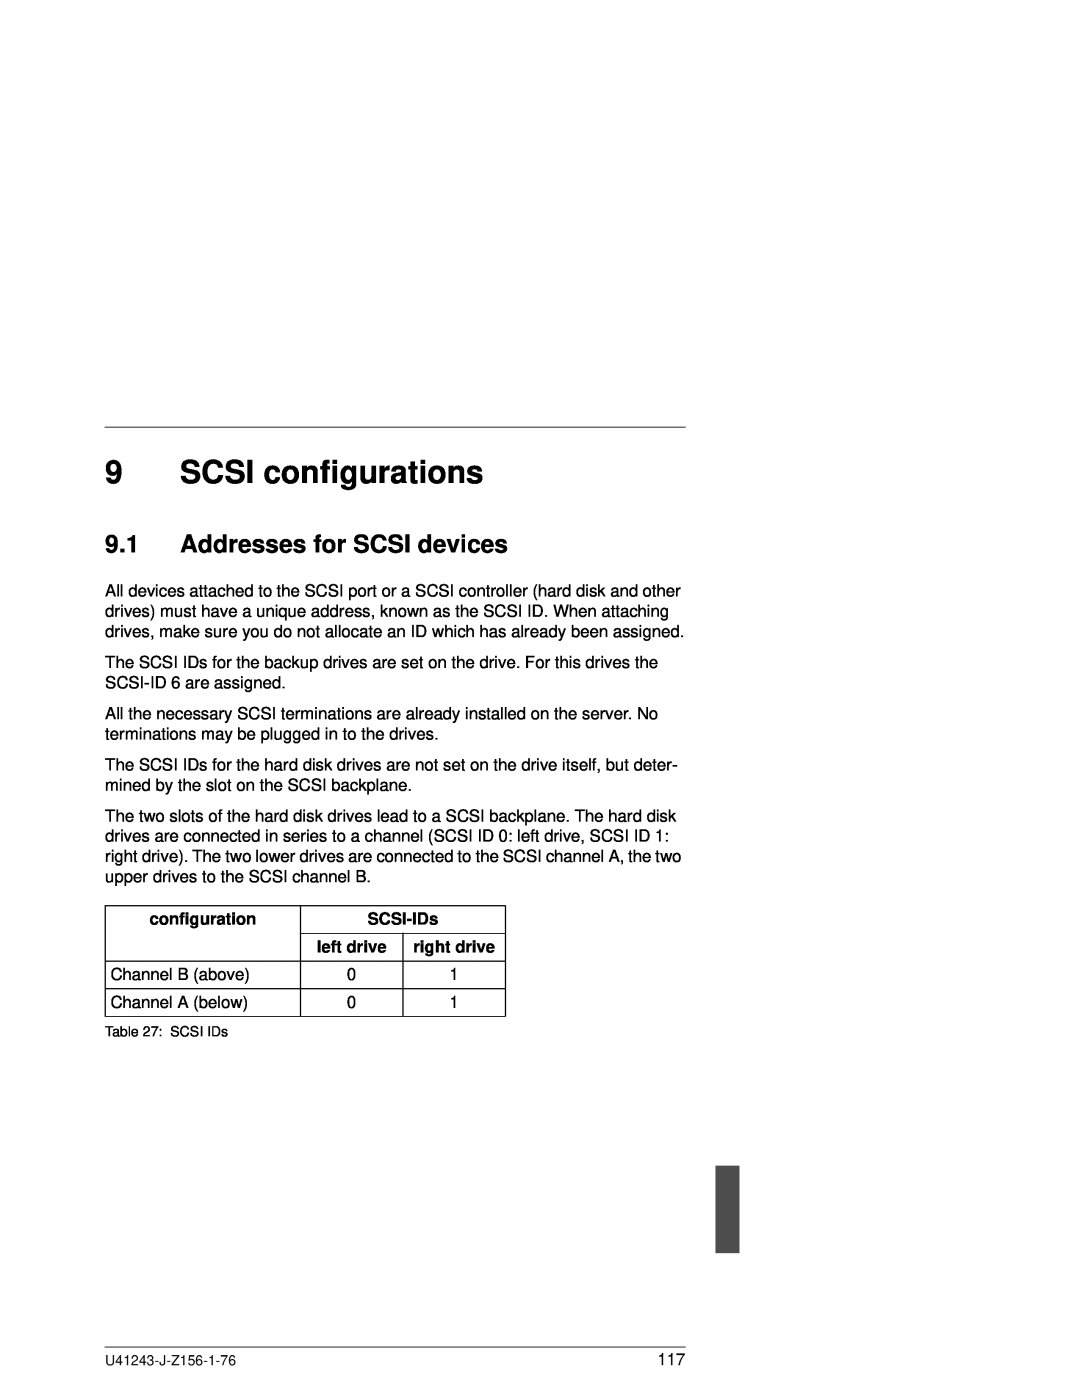 Fujitsu N800 manual SCSI configurations, Addresses for SCSI devices, SCSI-IDs 